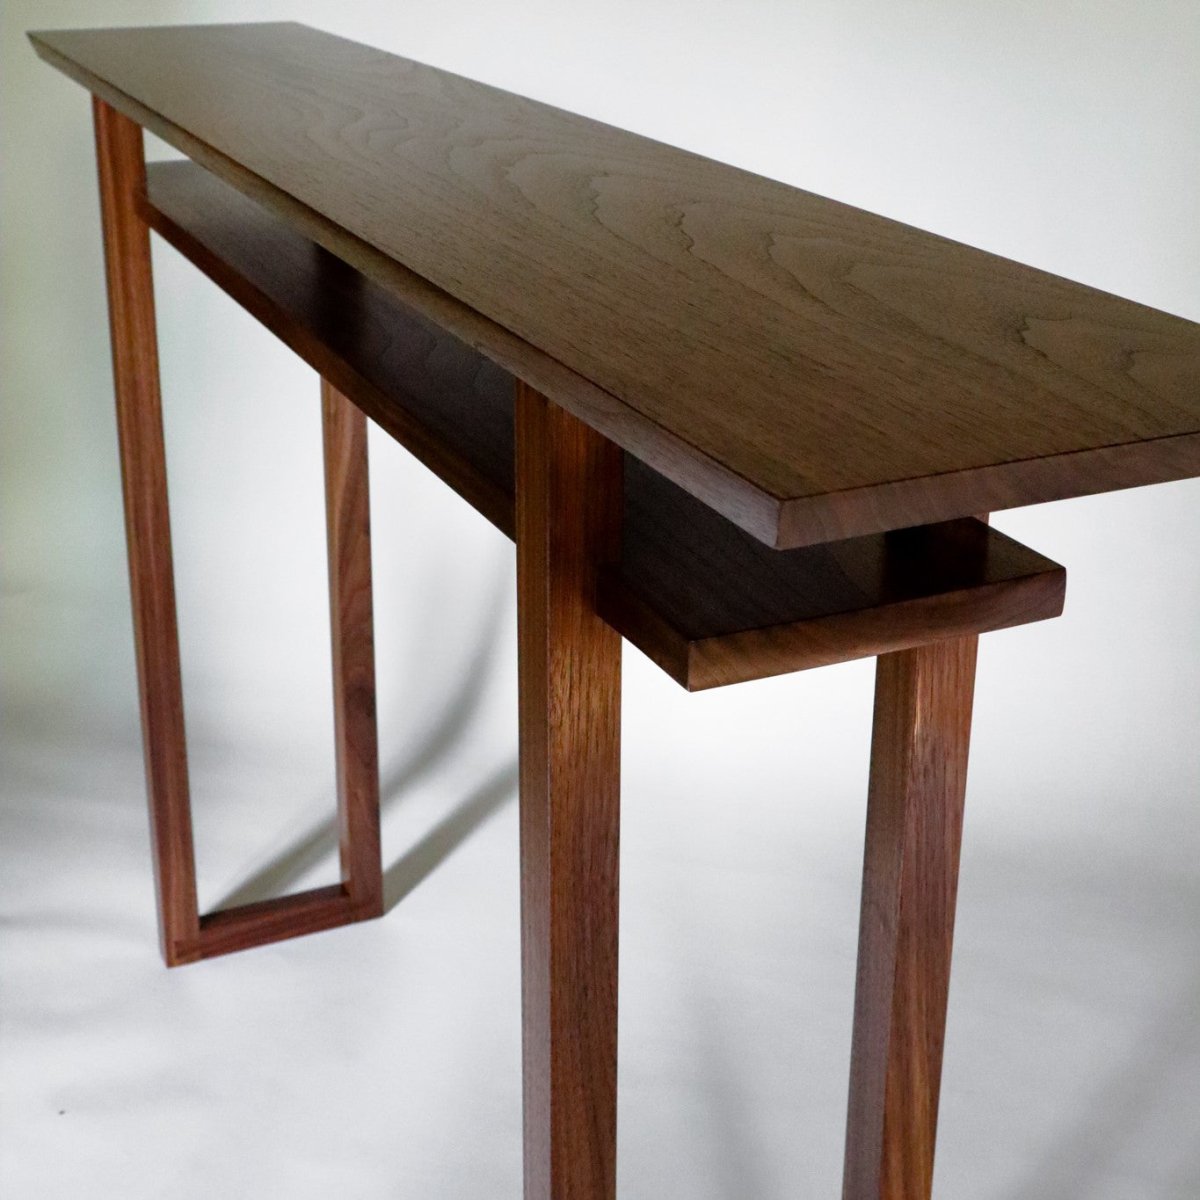 A narrow modern walnut console table with shelf by Mokuzai Furniture.